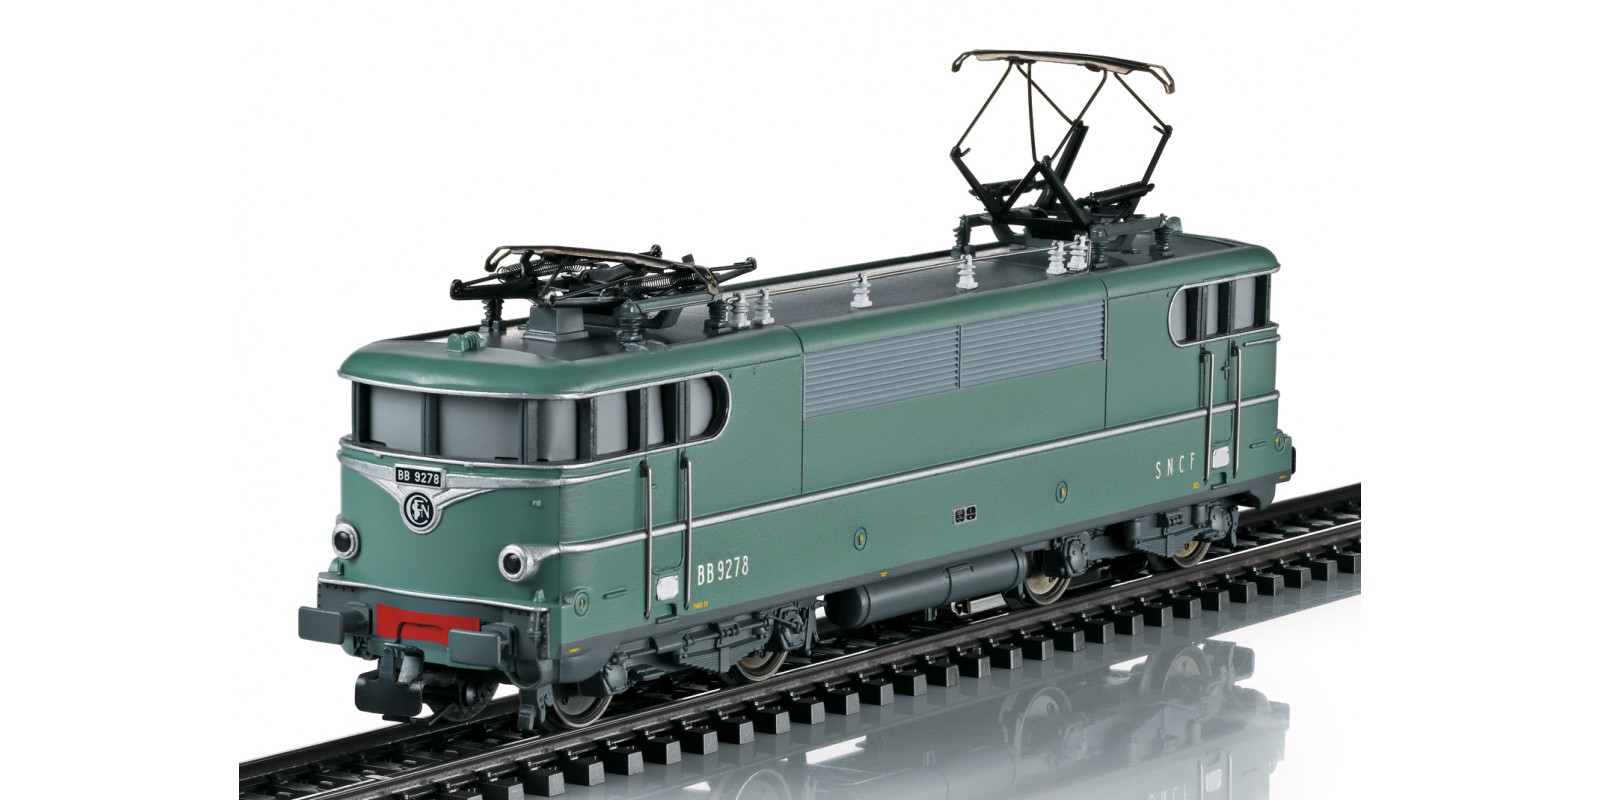 30380 Class BB 9200 Electric Locomotive